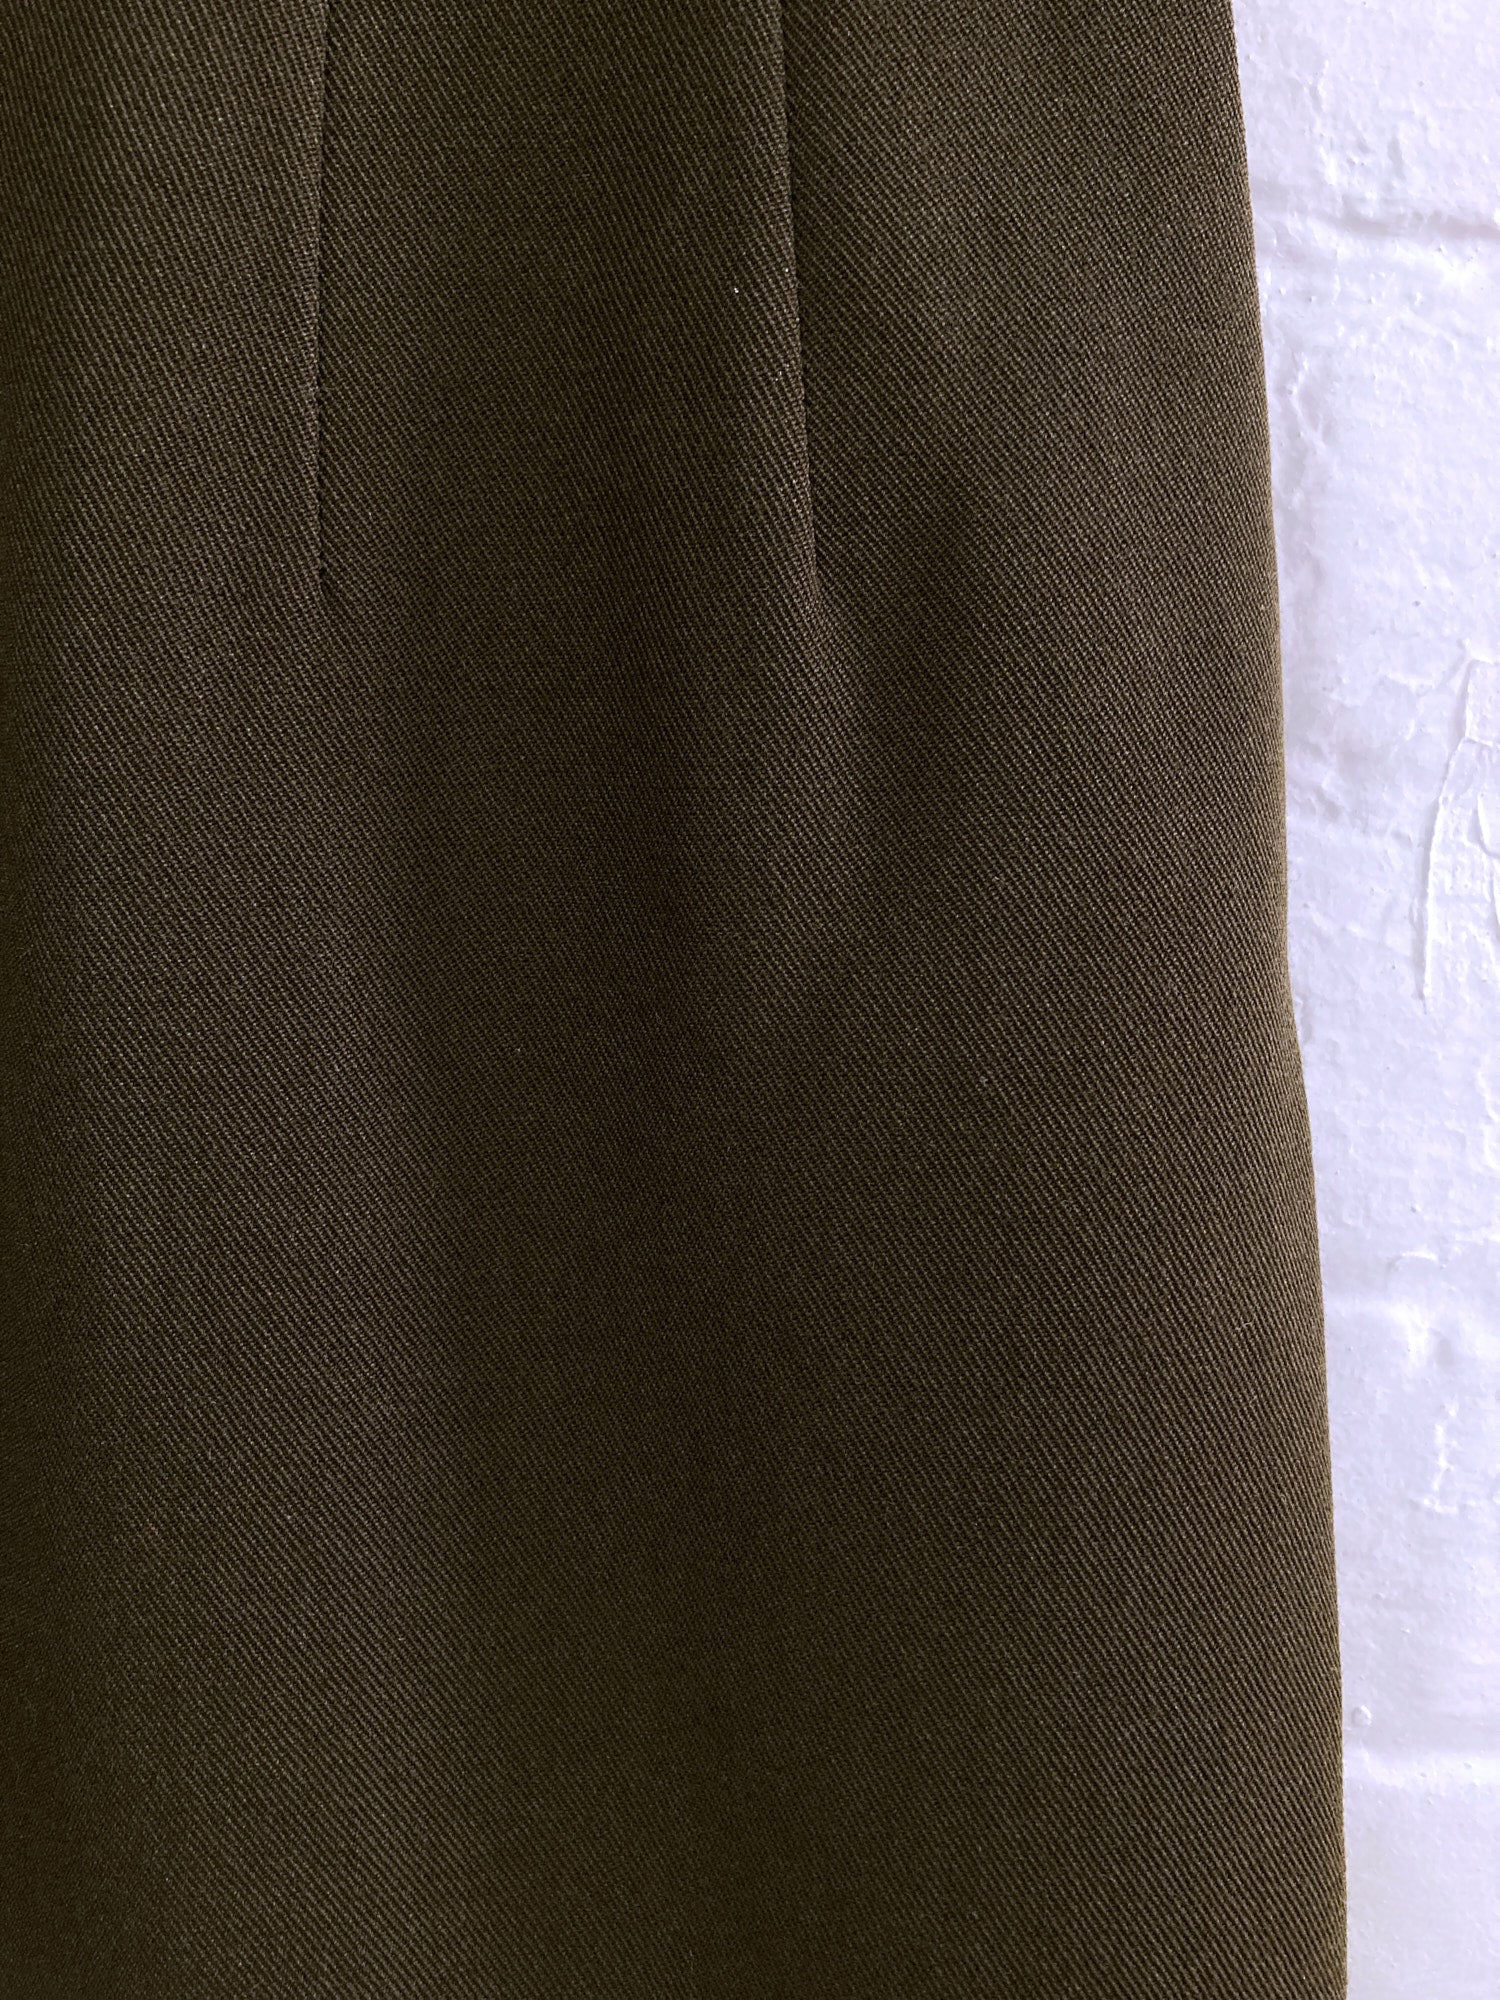 Tricot Comme des Garcons 1996 khaki wool gabardine waist tab maxi skirt - M